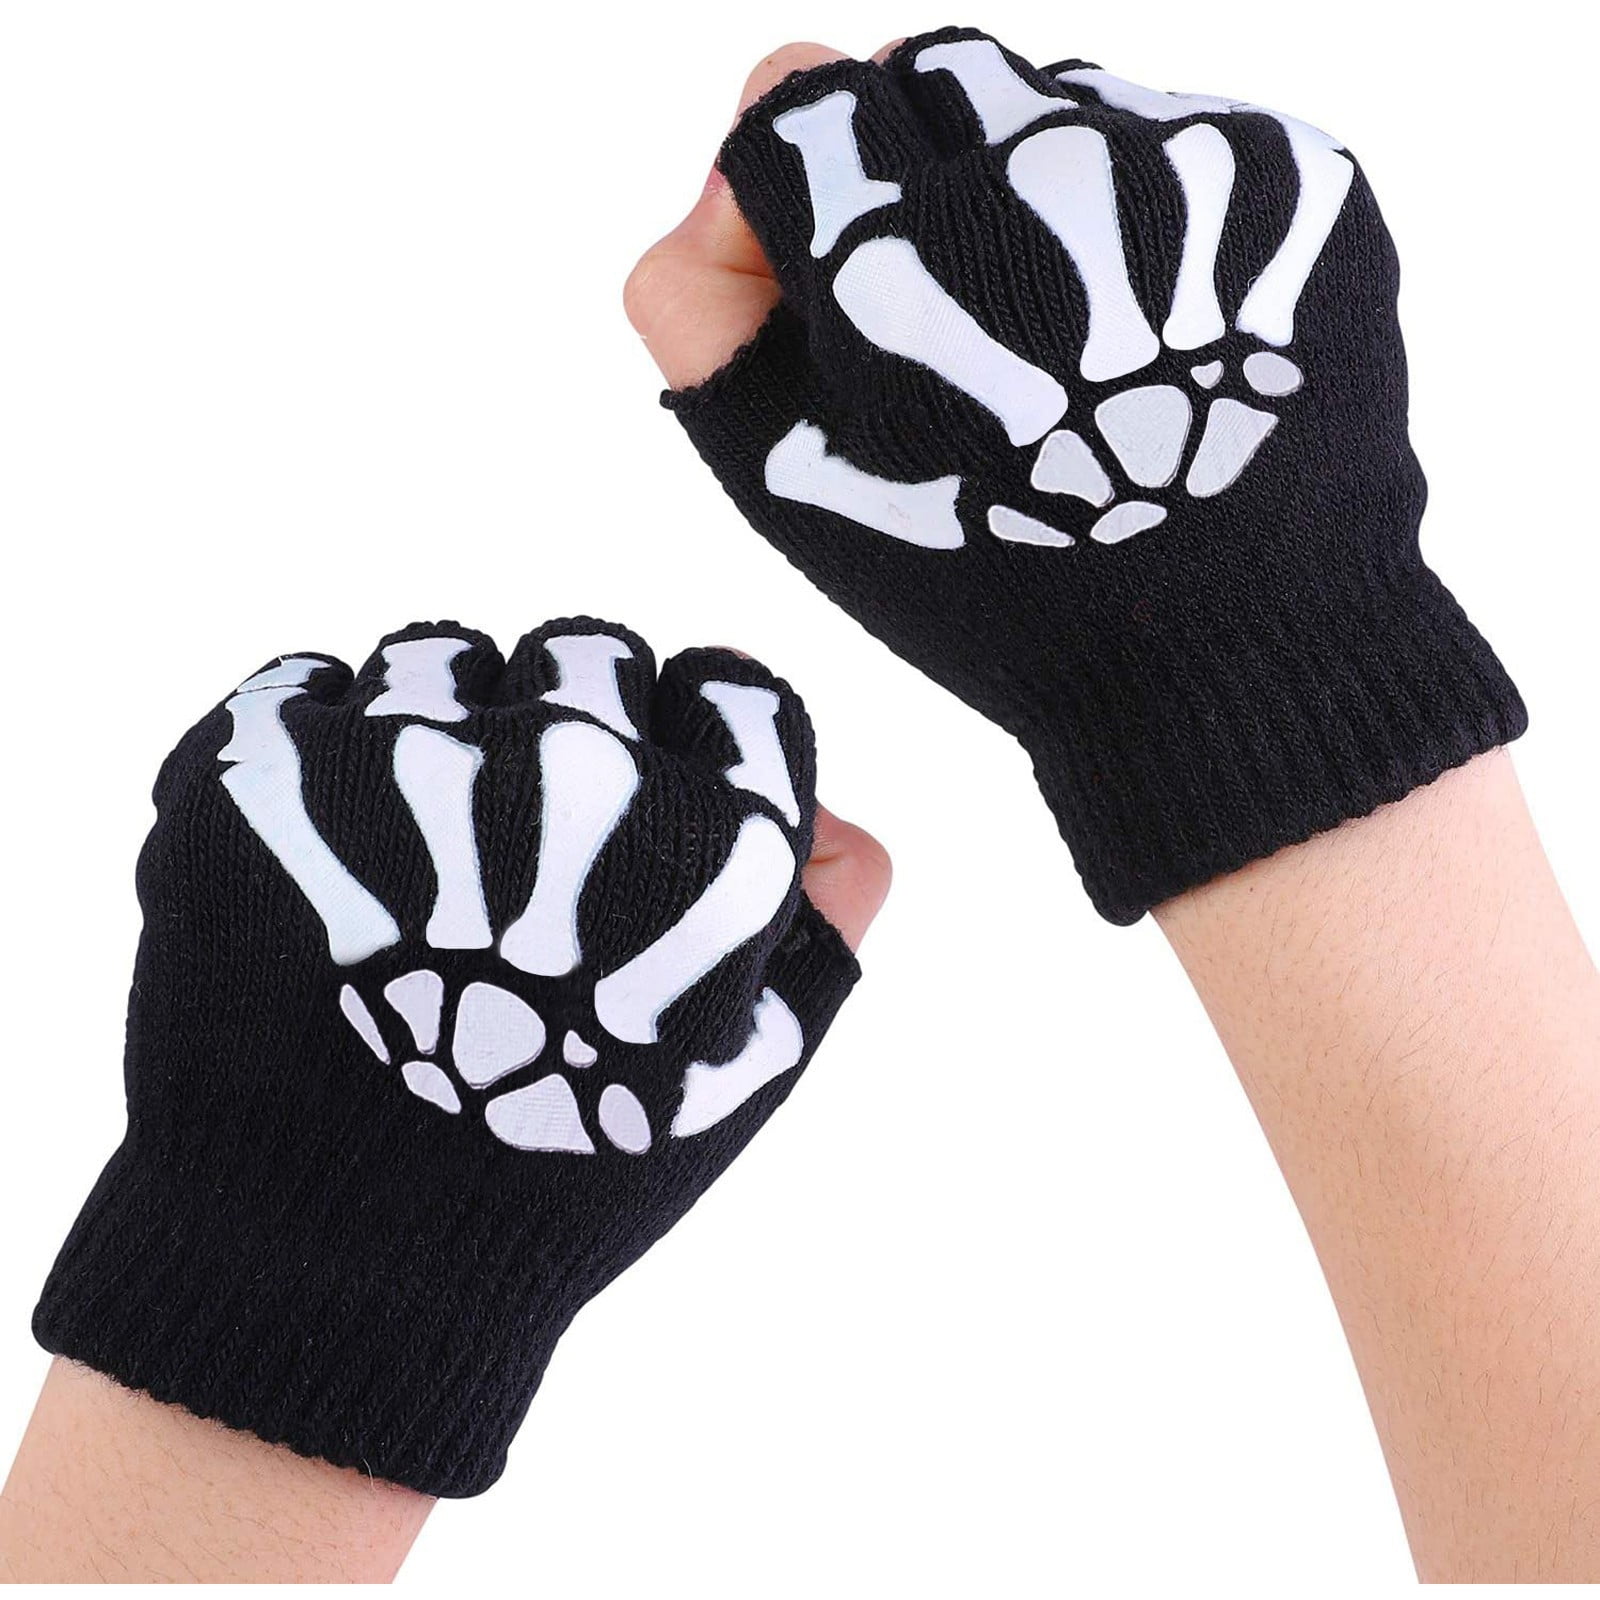 Details about   1/2/5 Pairs Kids Skeleton Warm Glow in The Dark Fingerless Knitted Gloves Mitten